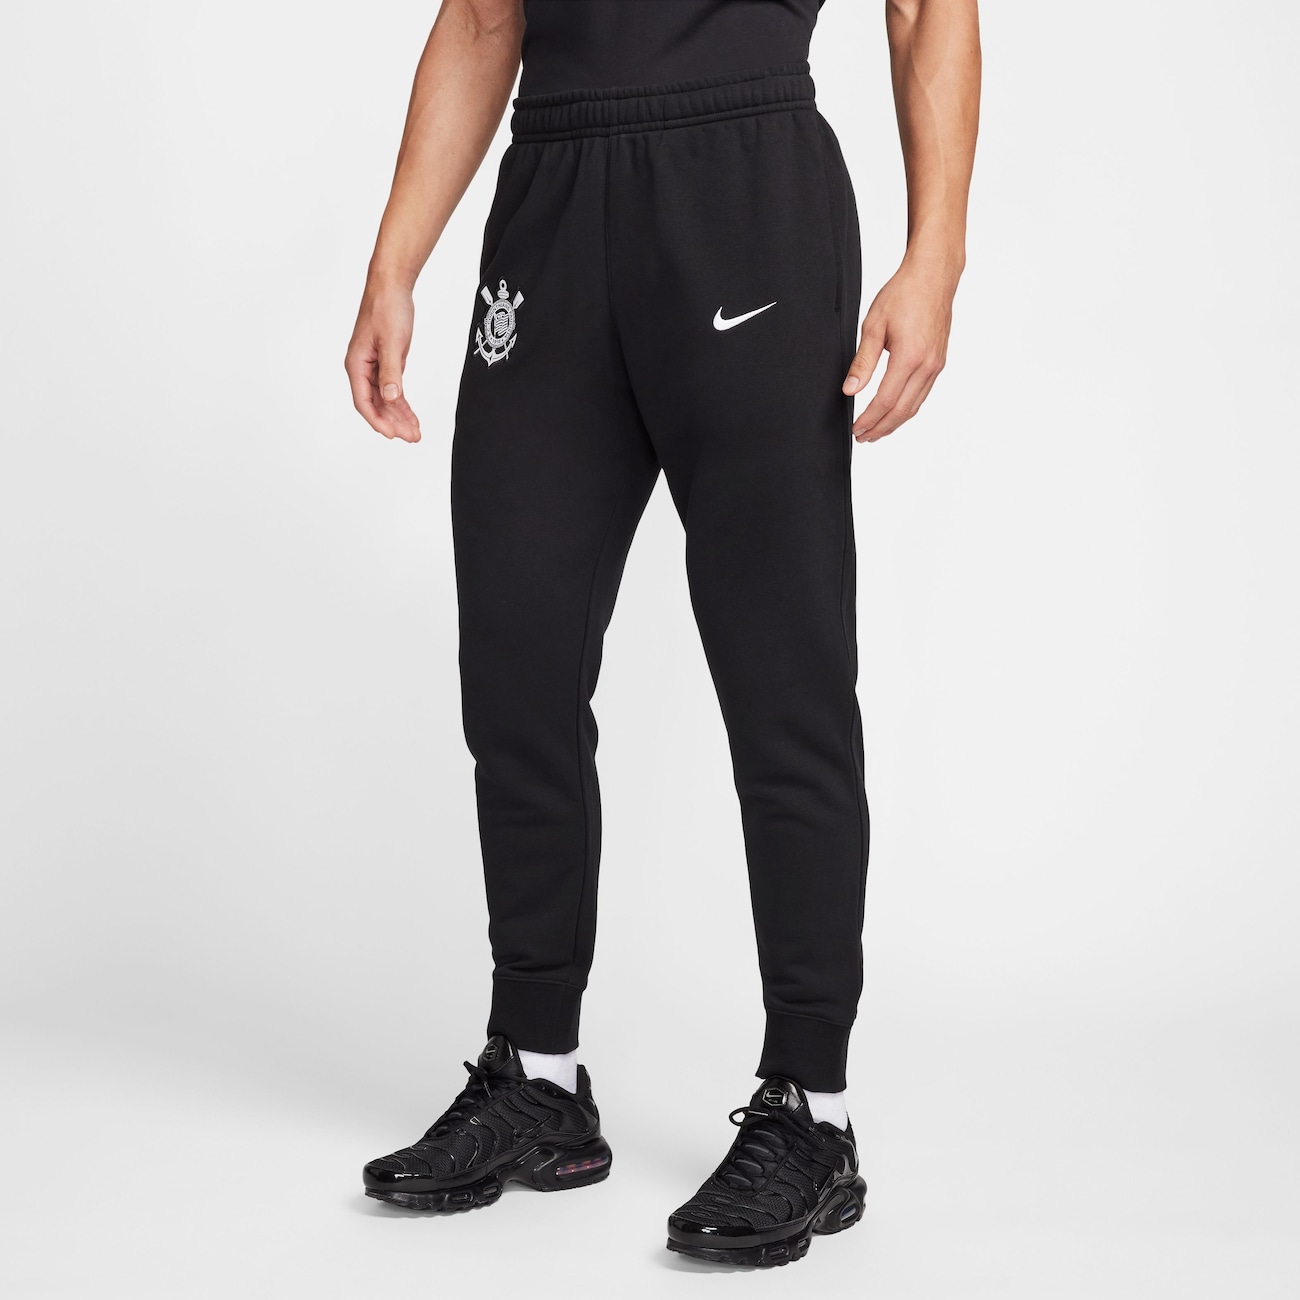 Calça Nike Sportswear Corinthians Jogger Masculina